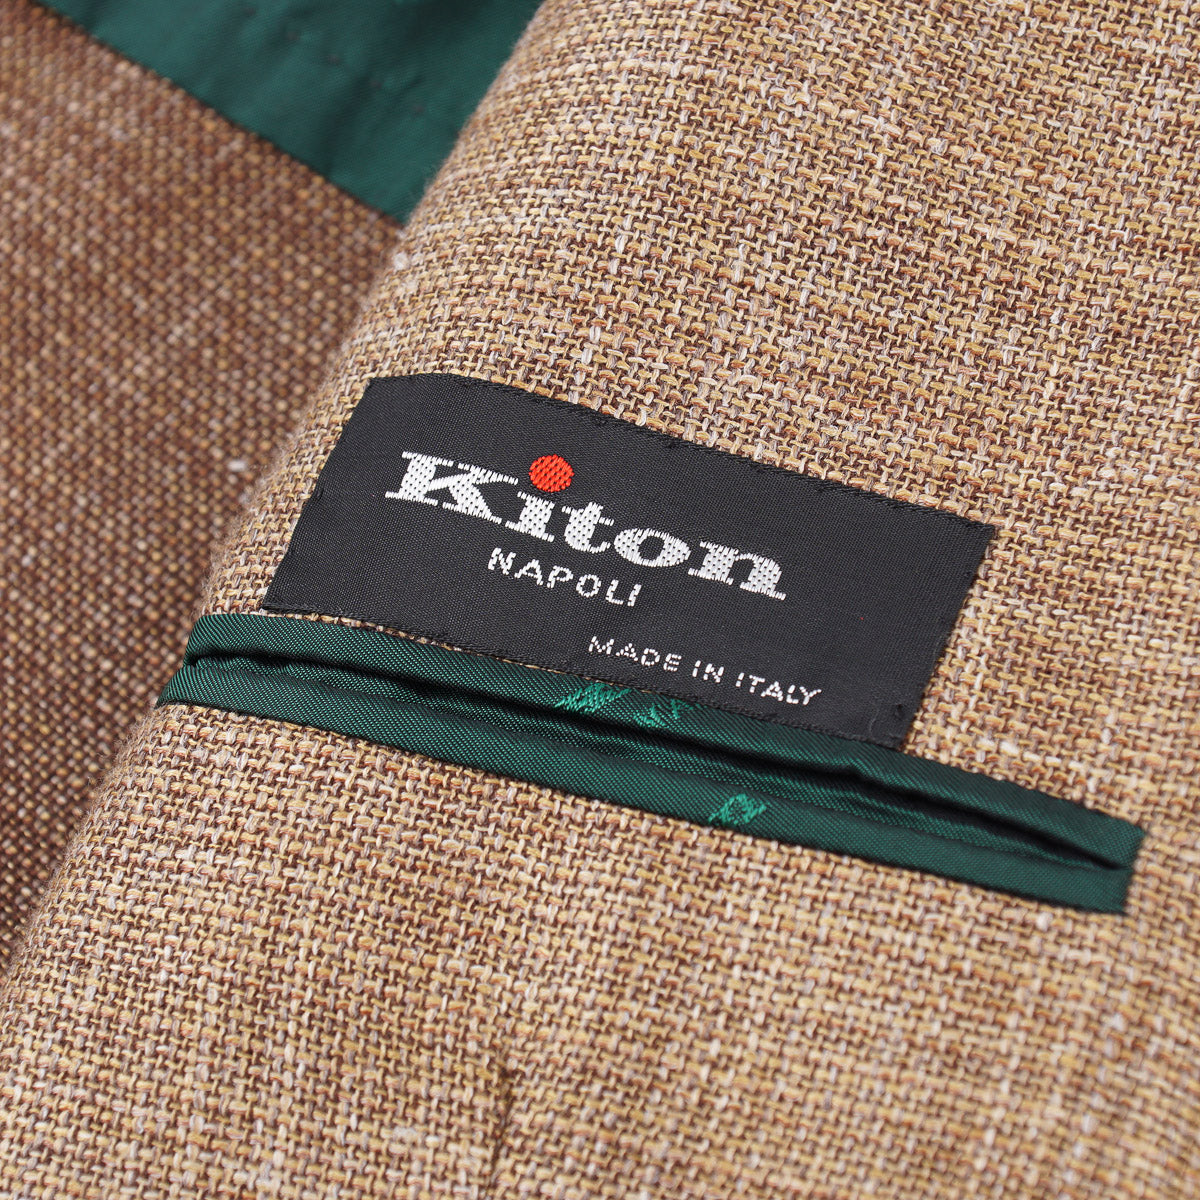 Kiton Cashmere-Silk-Linen Sport Coat - Top Shelf Apparel